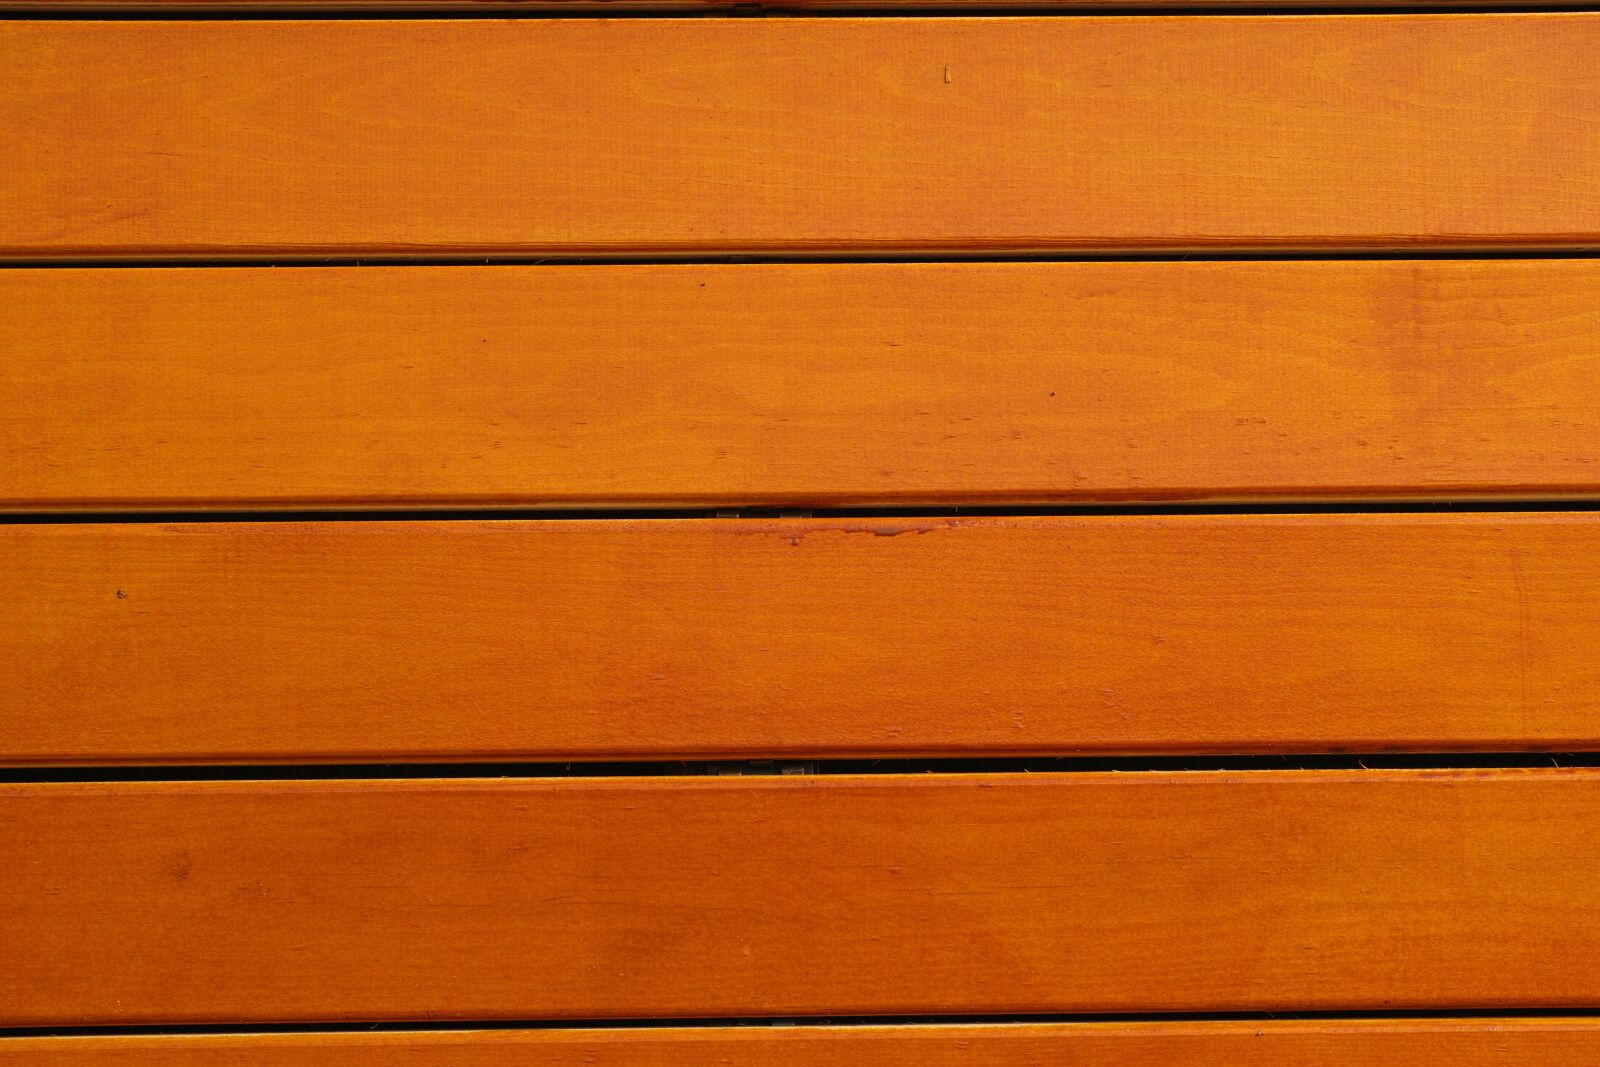 Sigma DP3 Merrill sample photo. Wood, wall, yellow photography